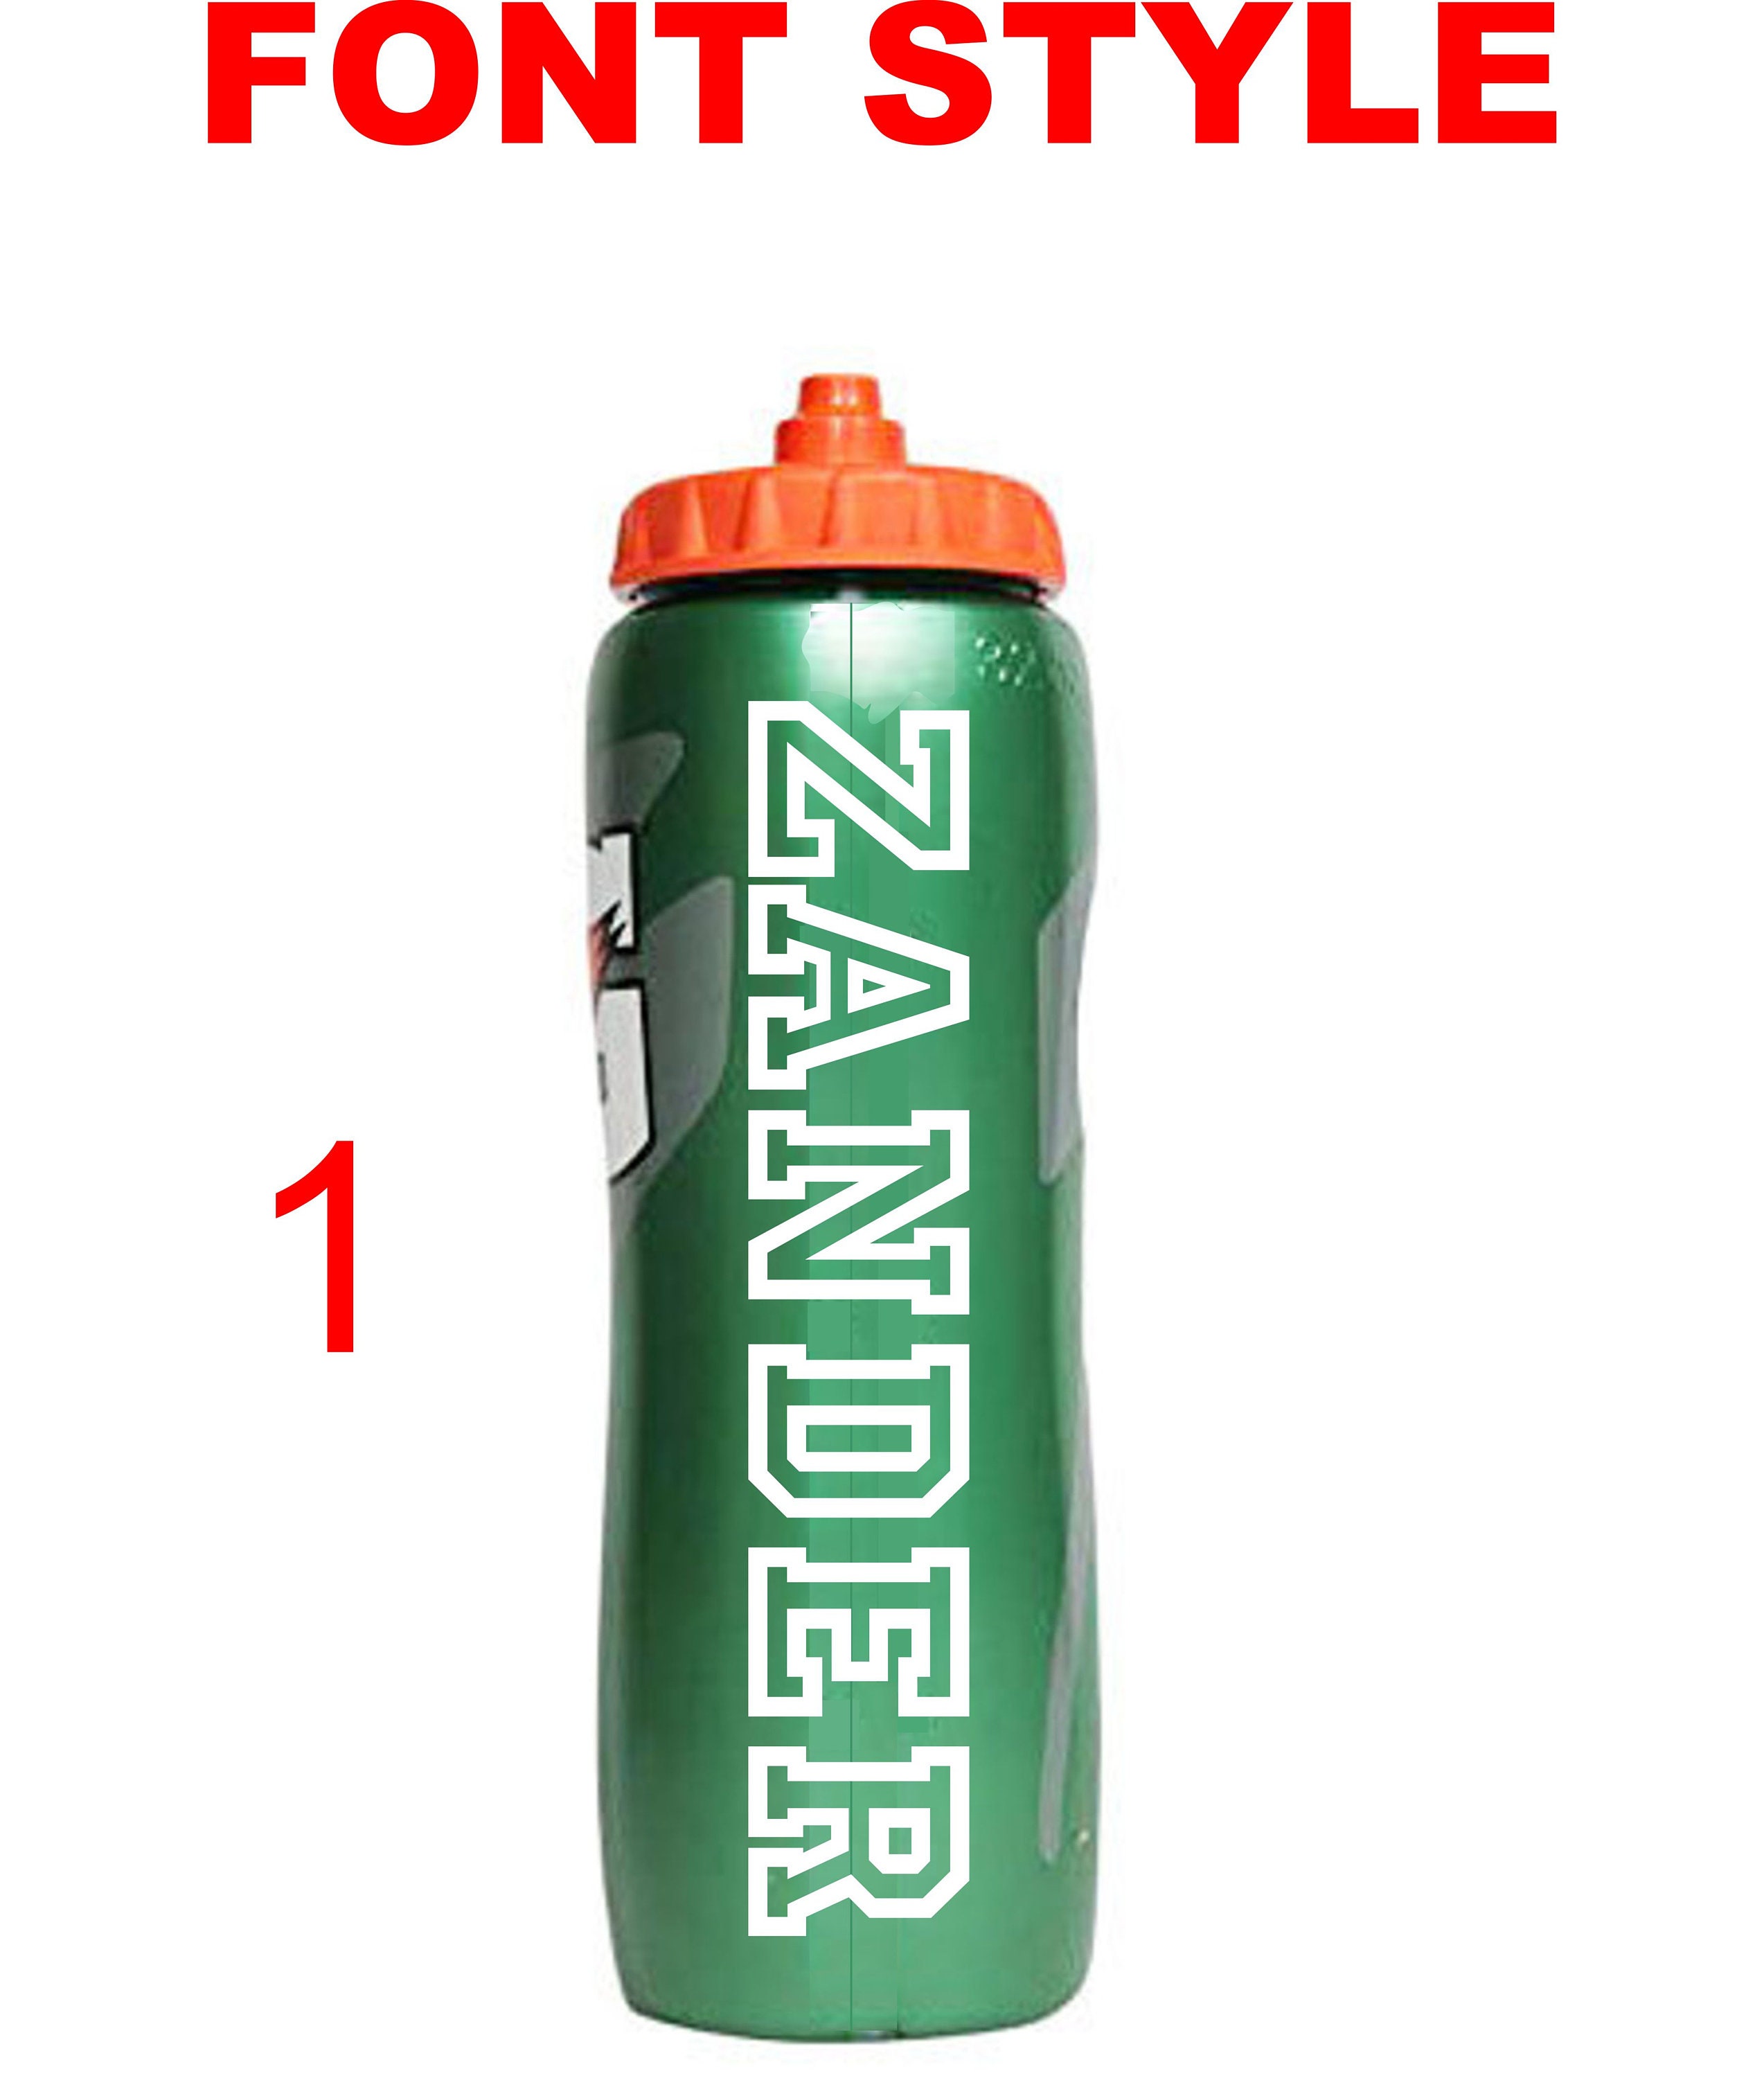 Gatorade Green Contour Water Bottle, 32 oz.